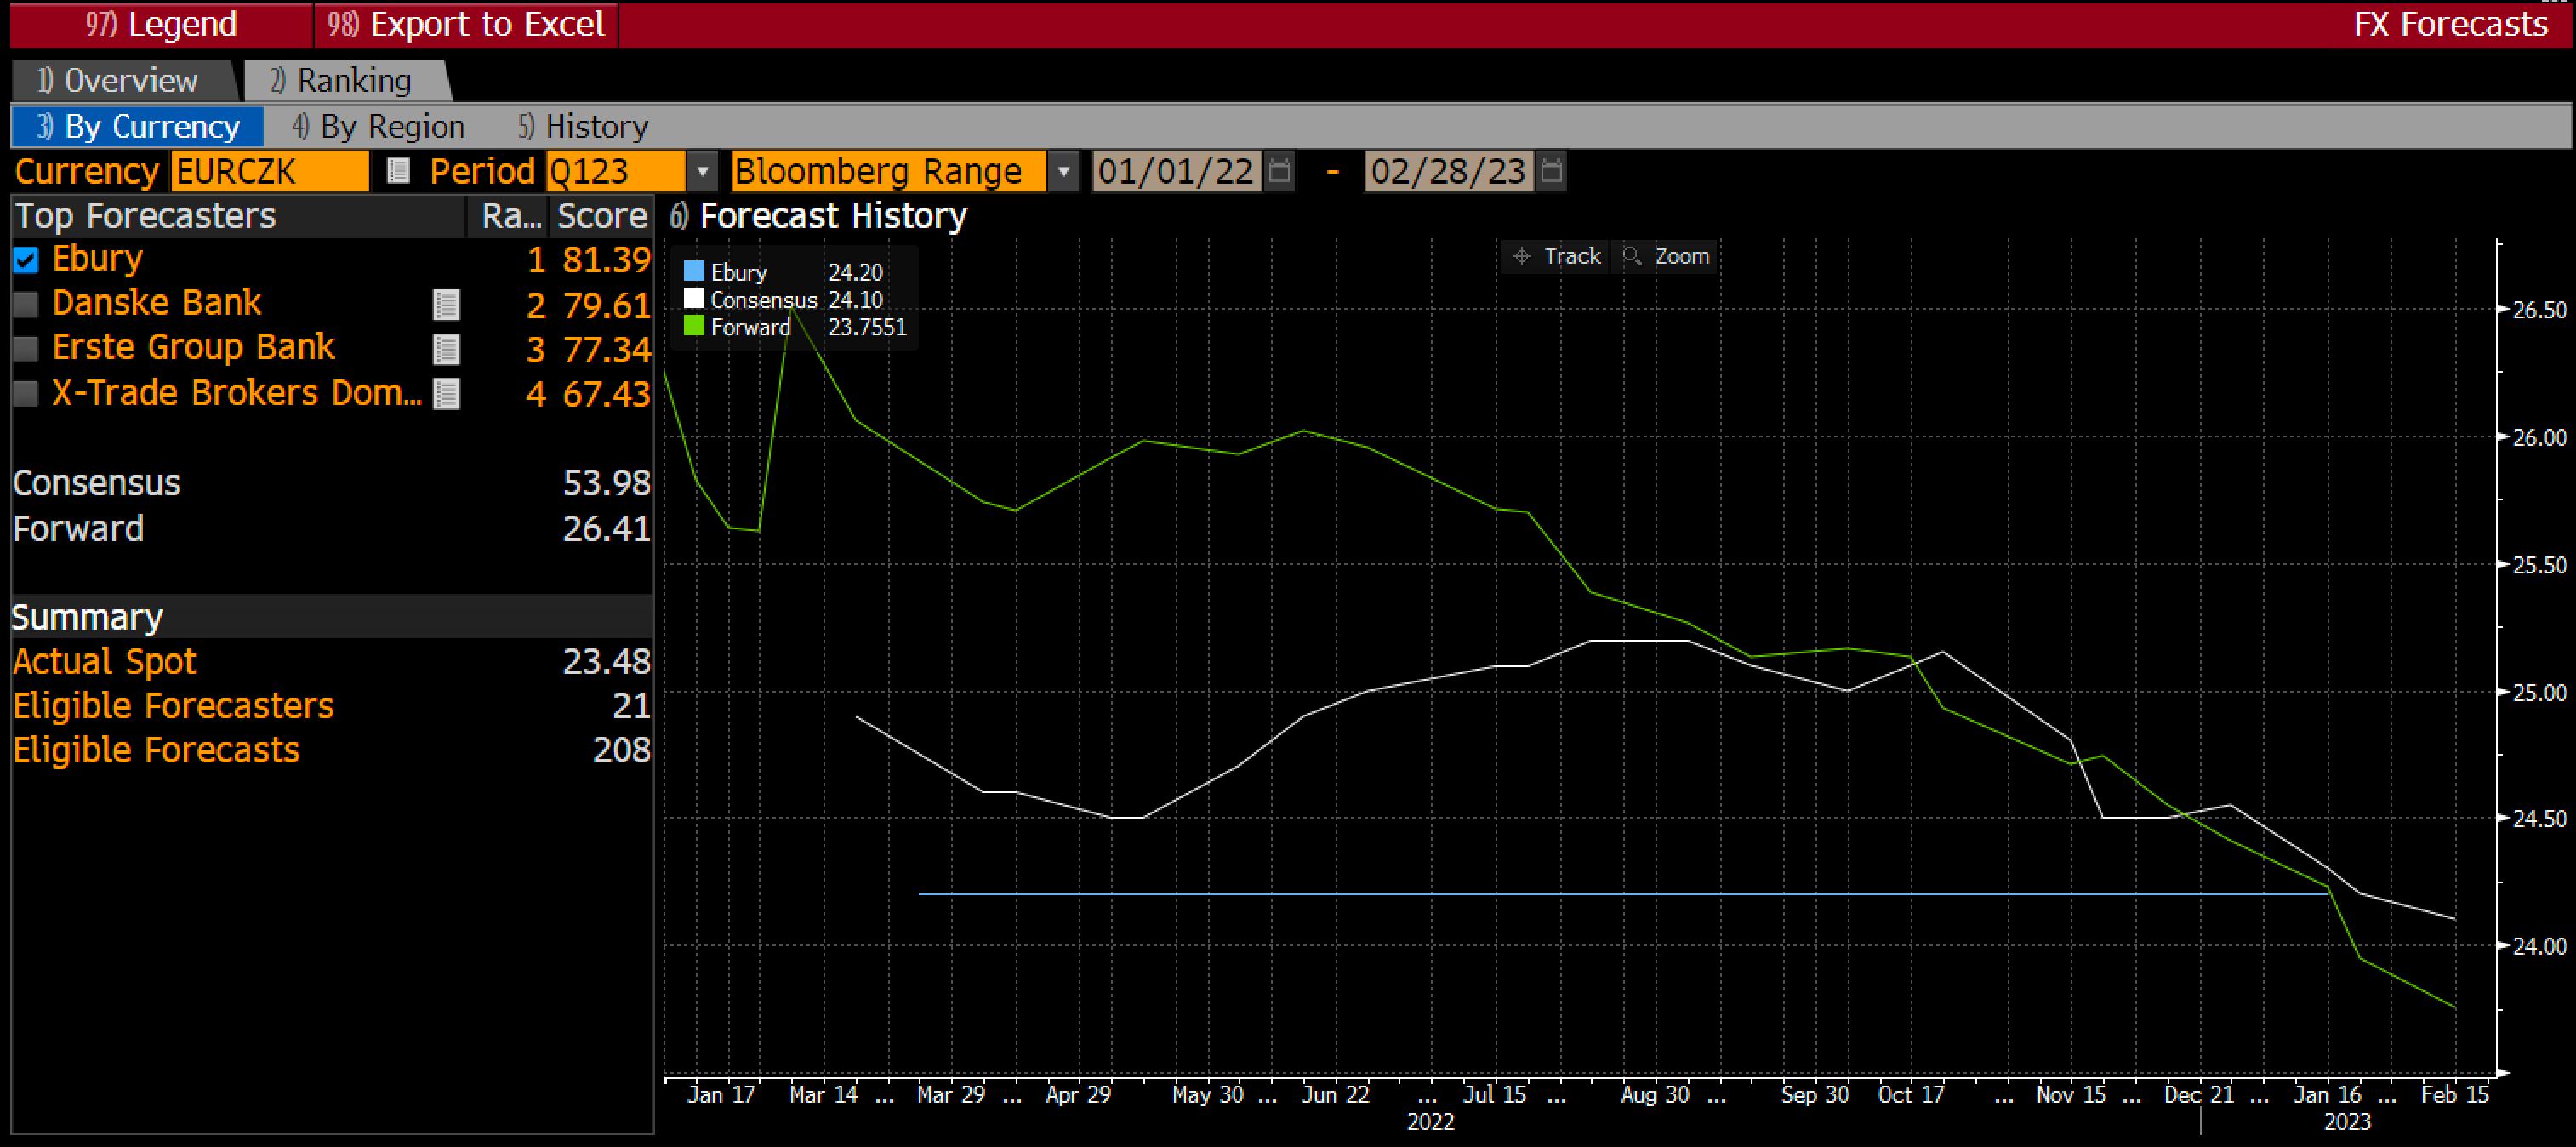 Bloomberg’s EUR/CZK Forecast Rankings [Q1 2023]